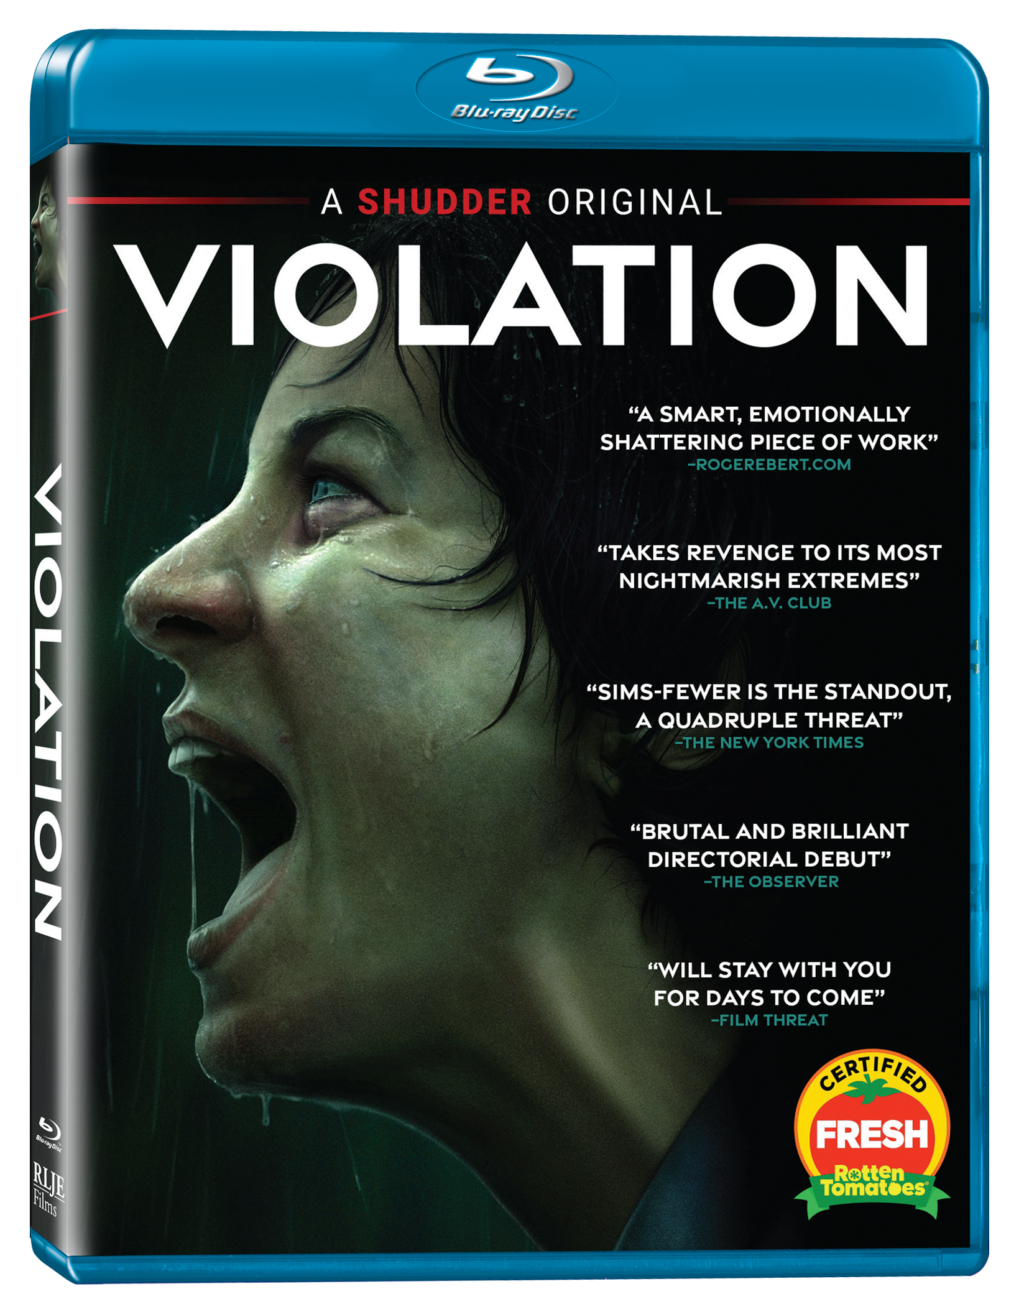 VIOLATION BD HI3D 1024x1312 - Extreme Revenge Shocker 'Violation' Now Set for Blu-ray and VOD Release in September